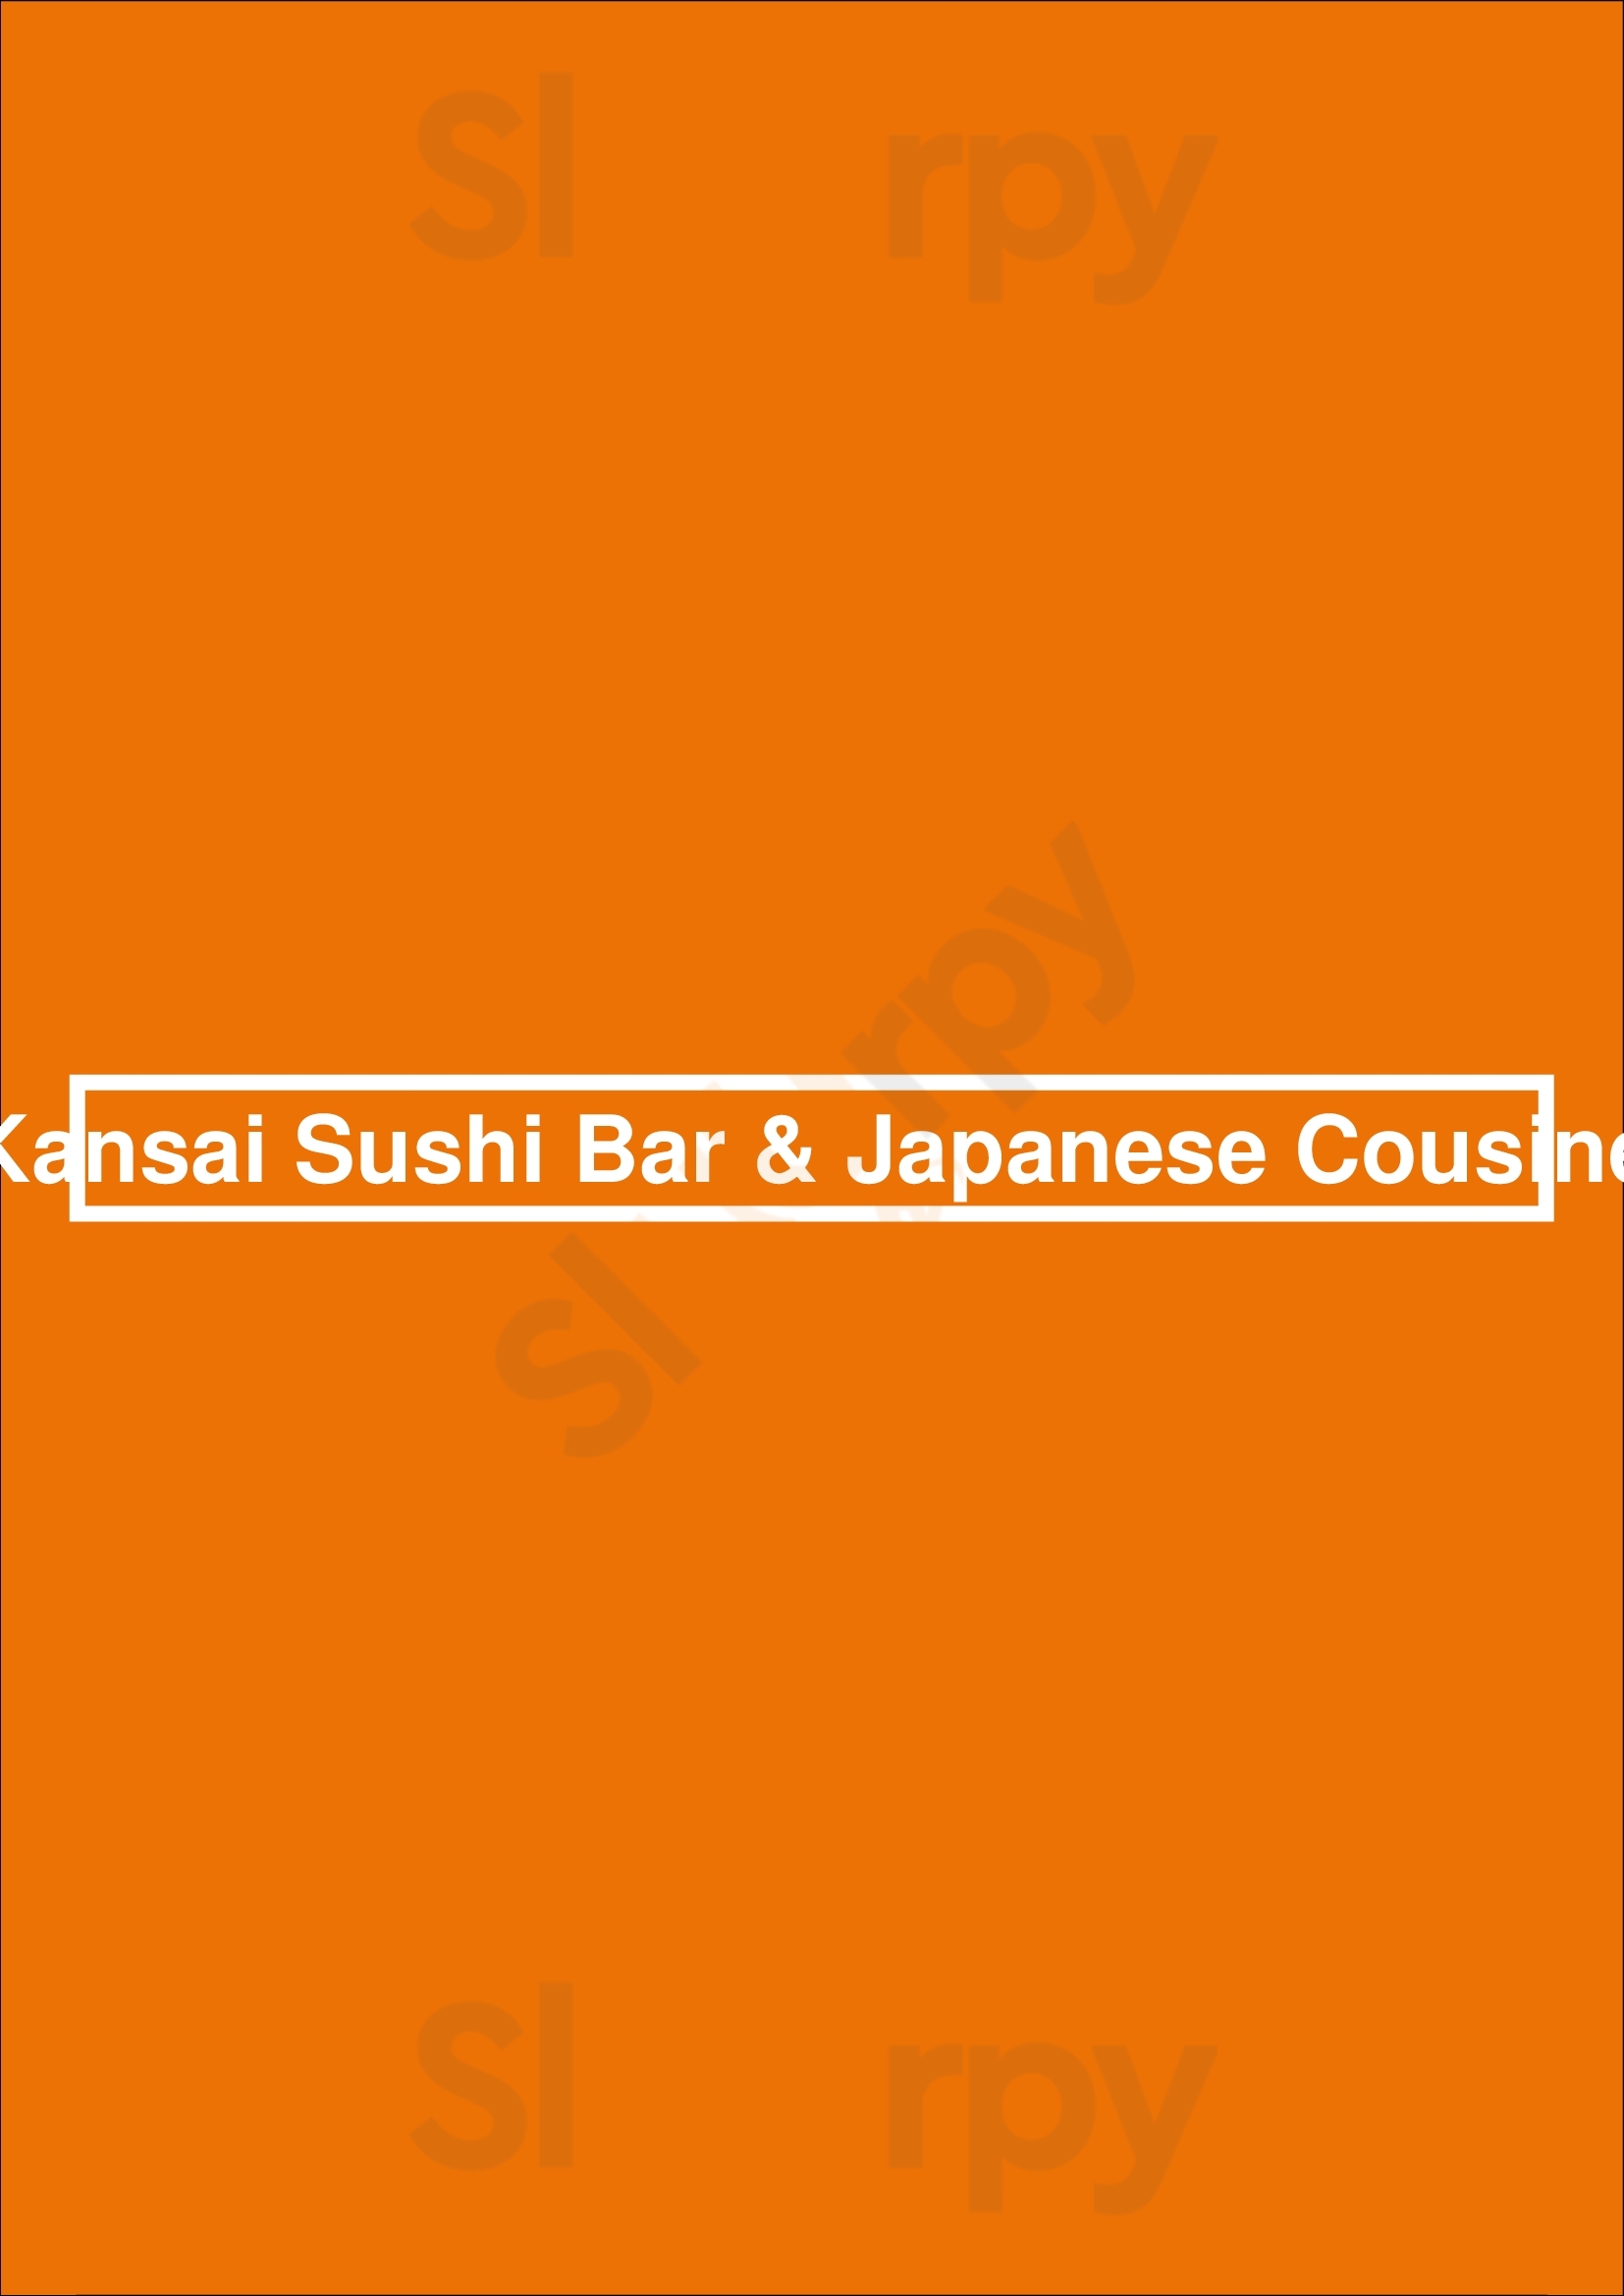 Kansai Sushi Bar & Japanese Cousine Oakland Menu - 1